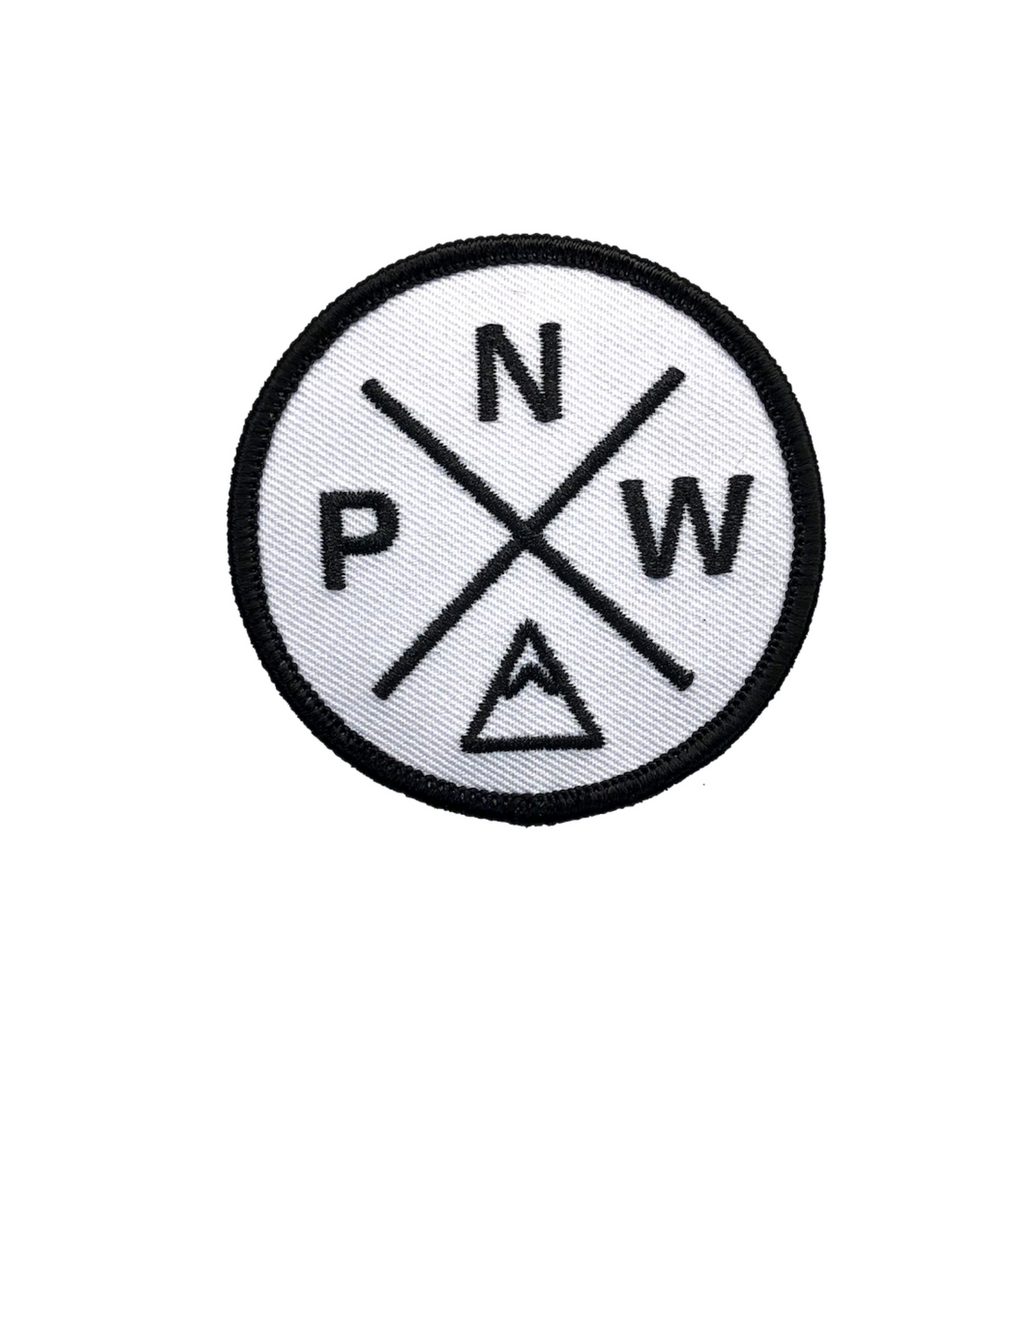 PNW Patch White